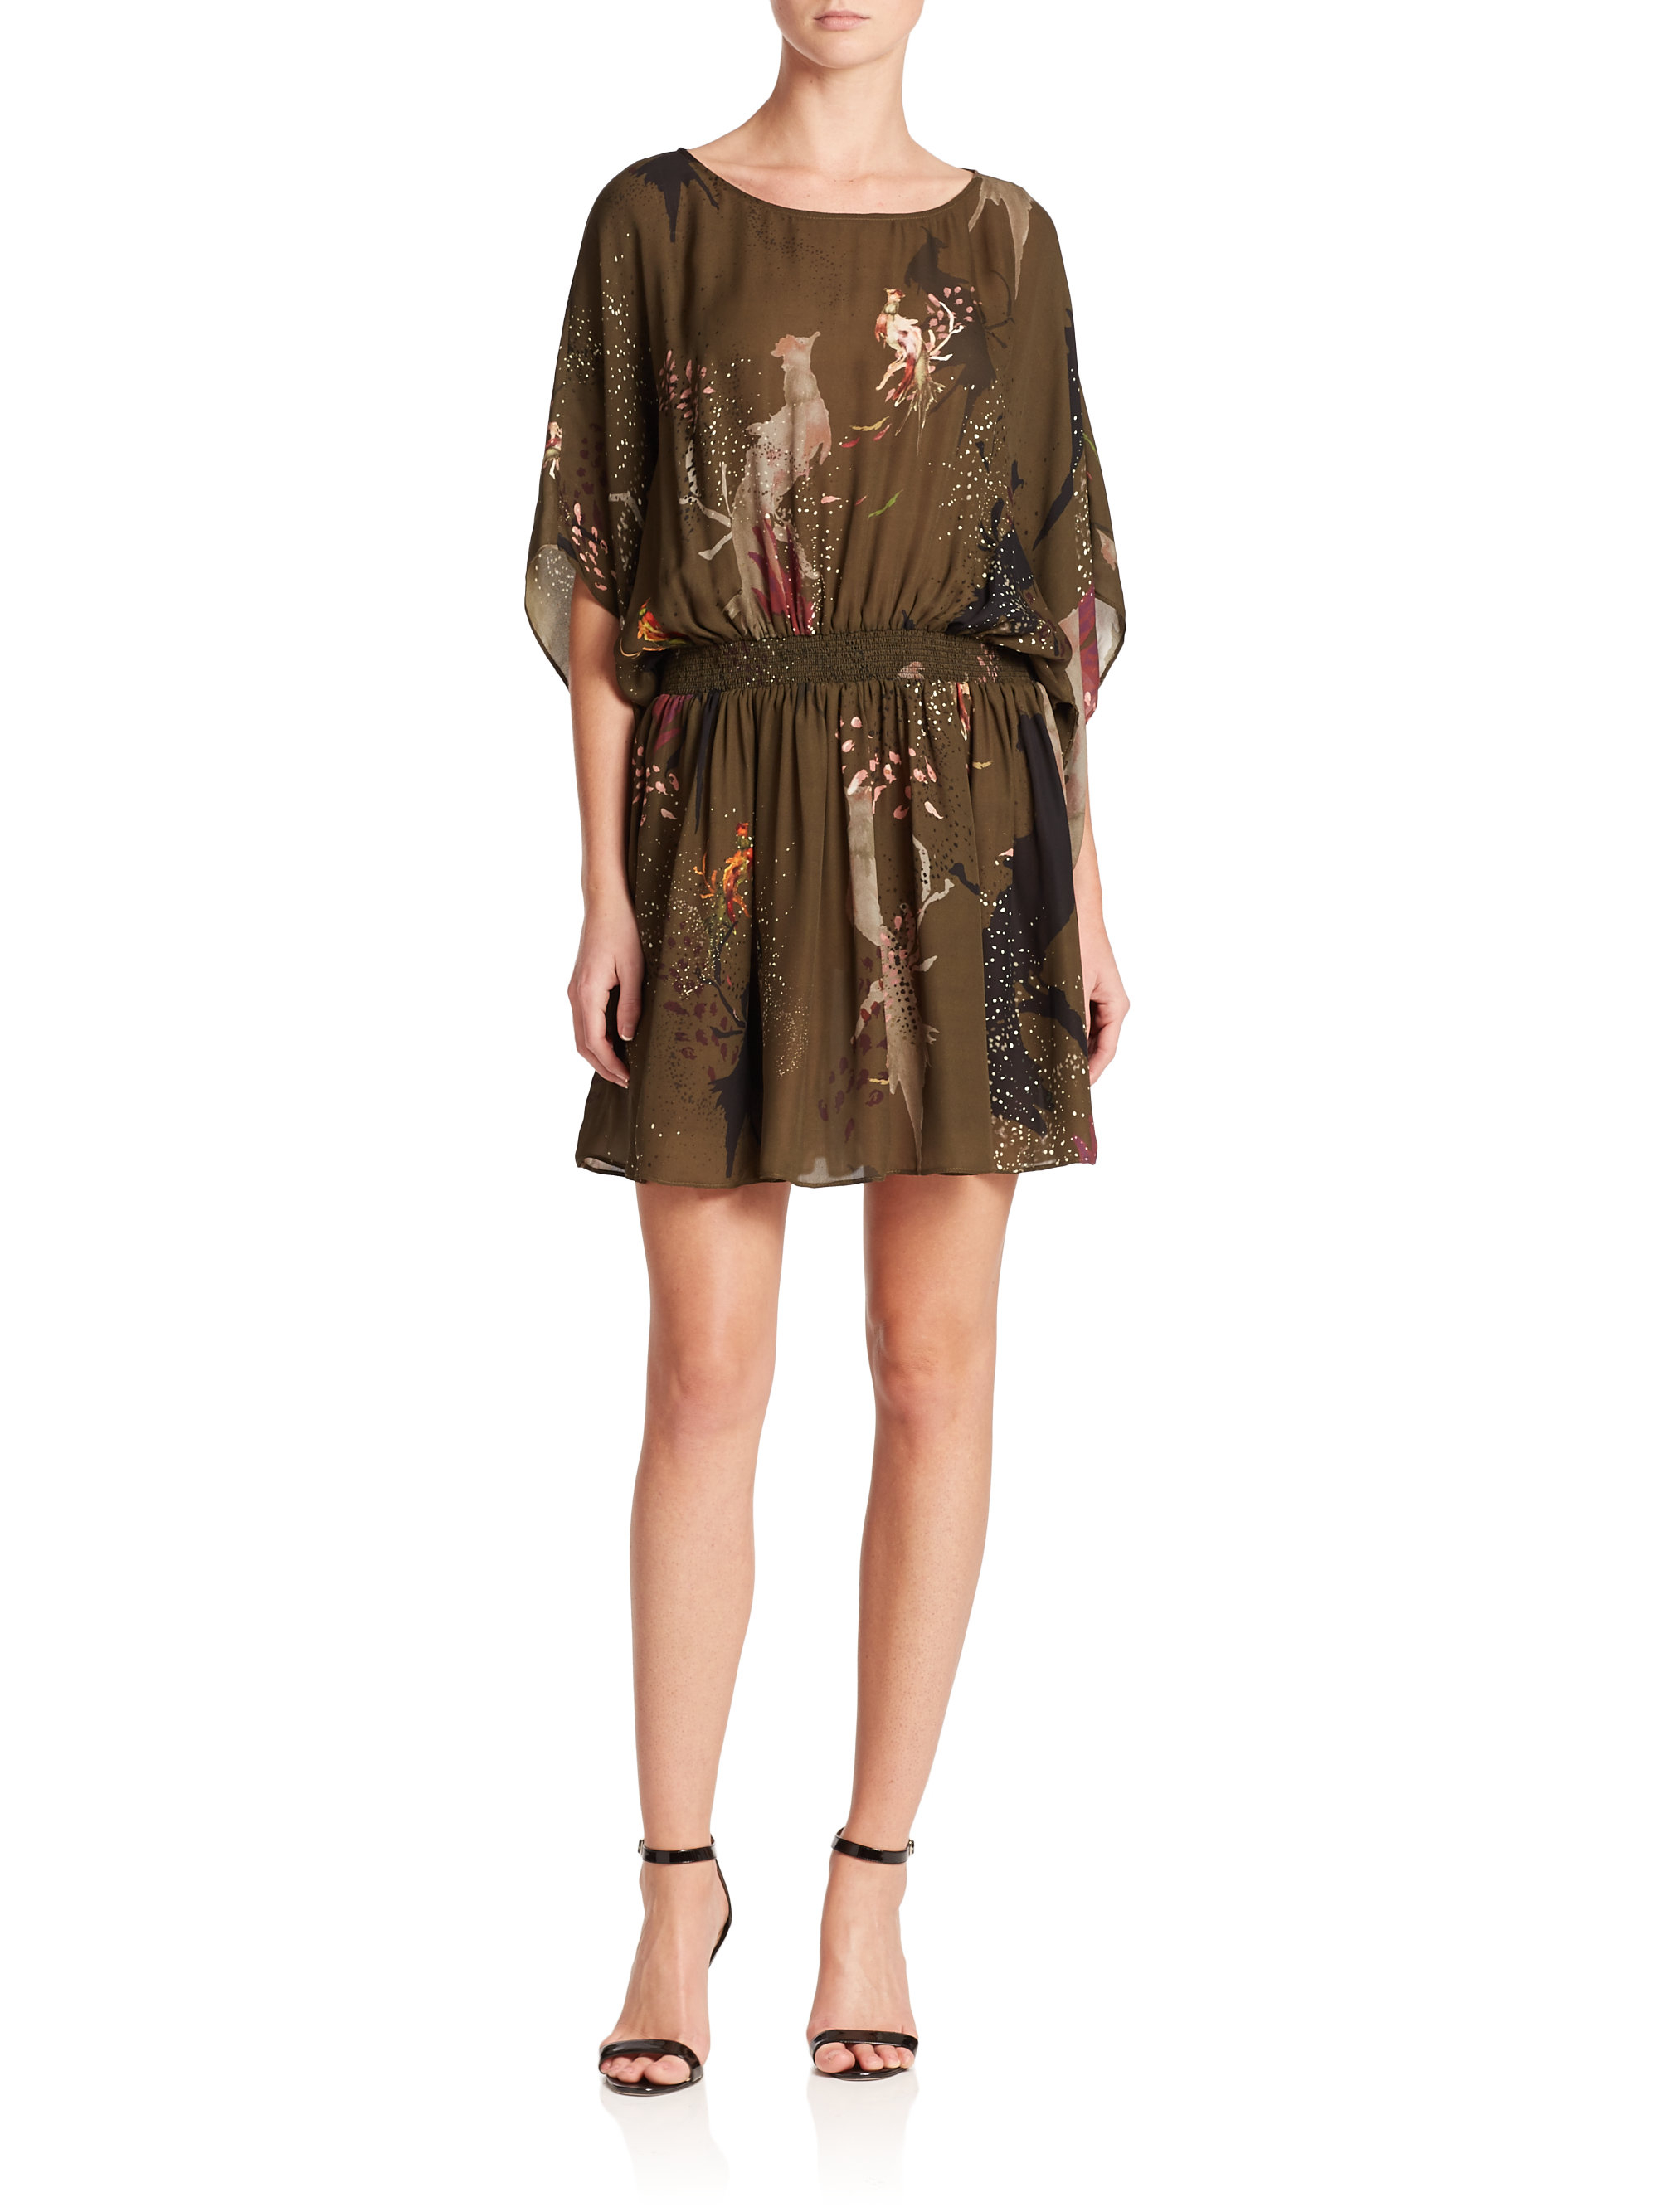 Lyst - Haute hippie Smocked Printed Silk Dress in Brown